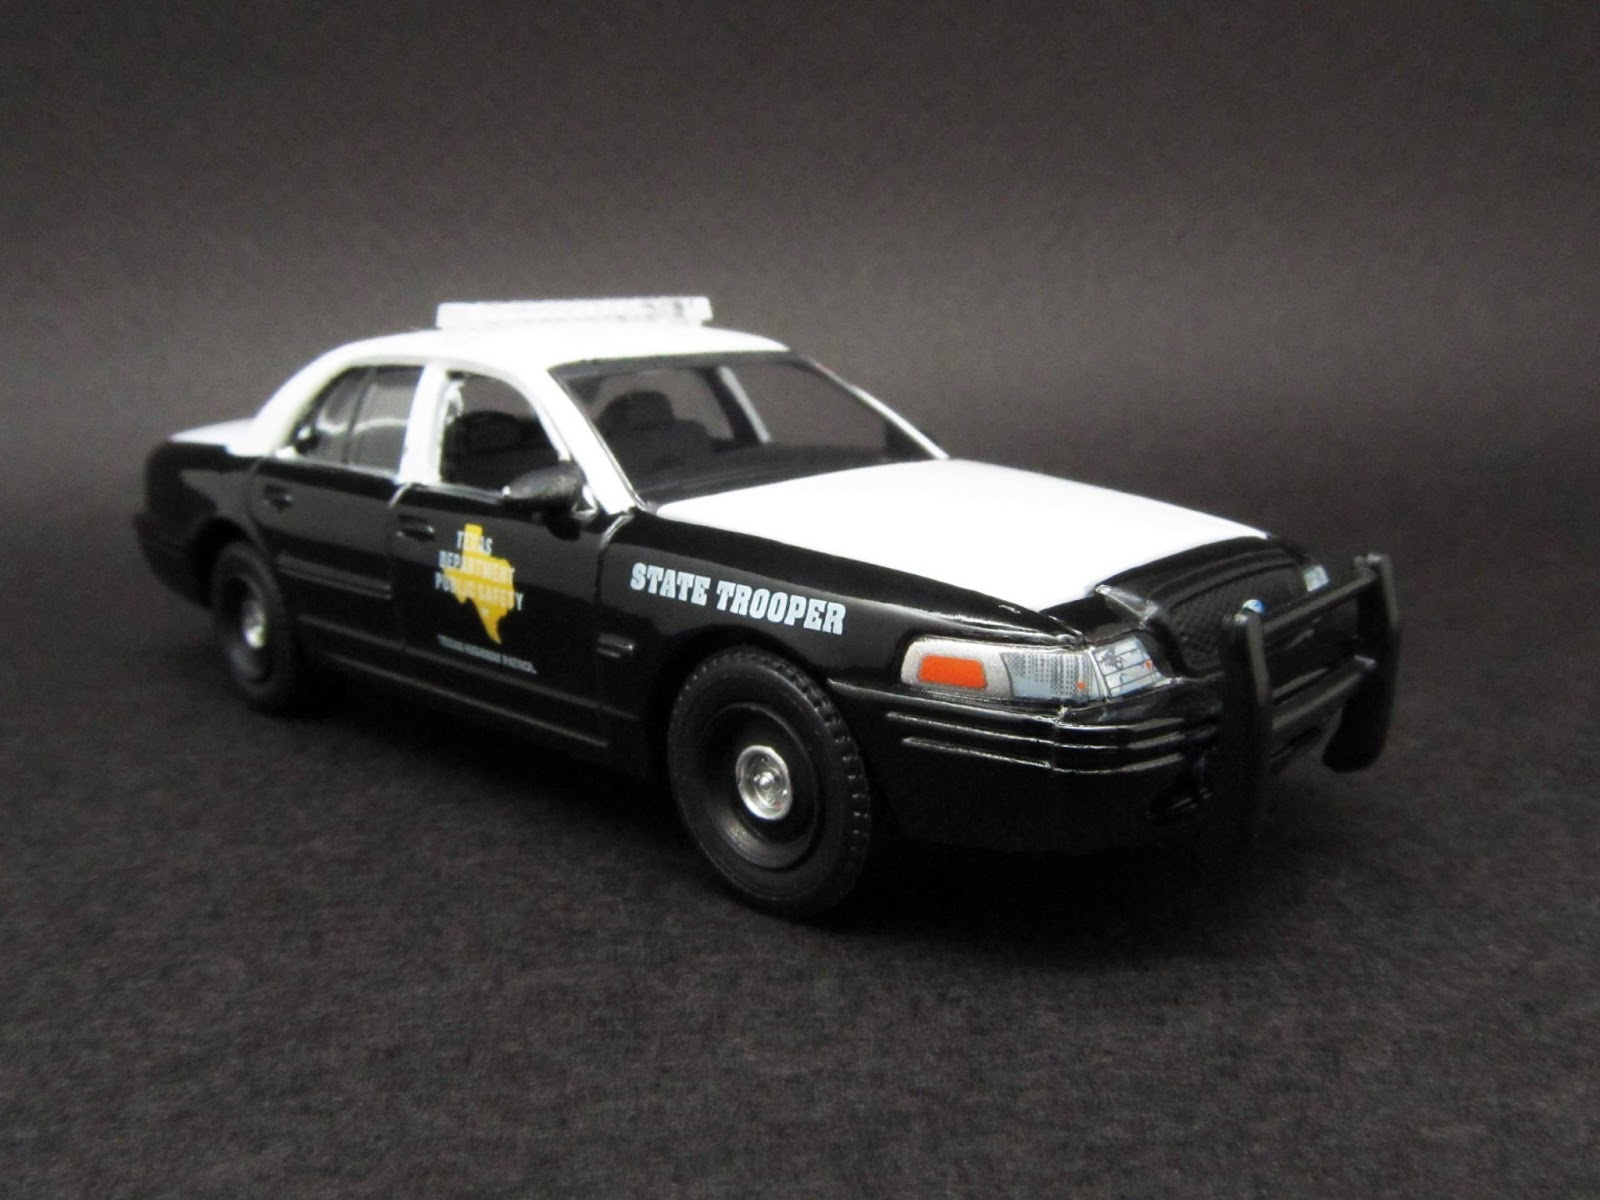 2008 Ford Crown Victoria - Texas Highway Patrol.